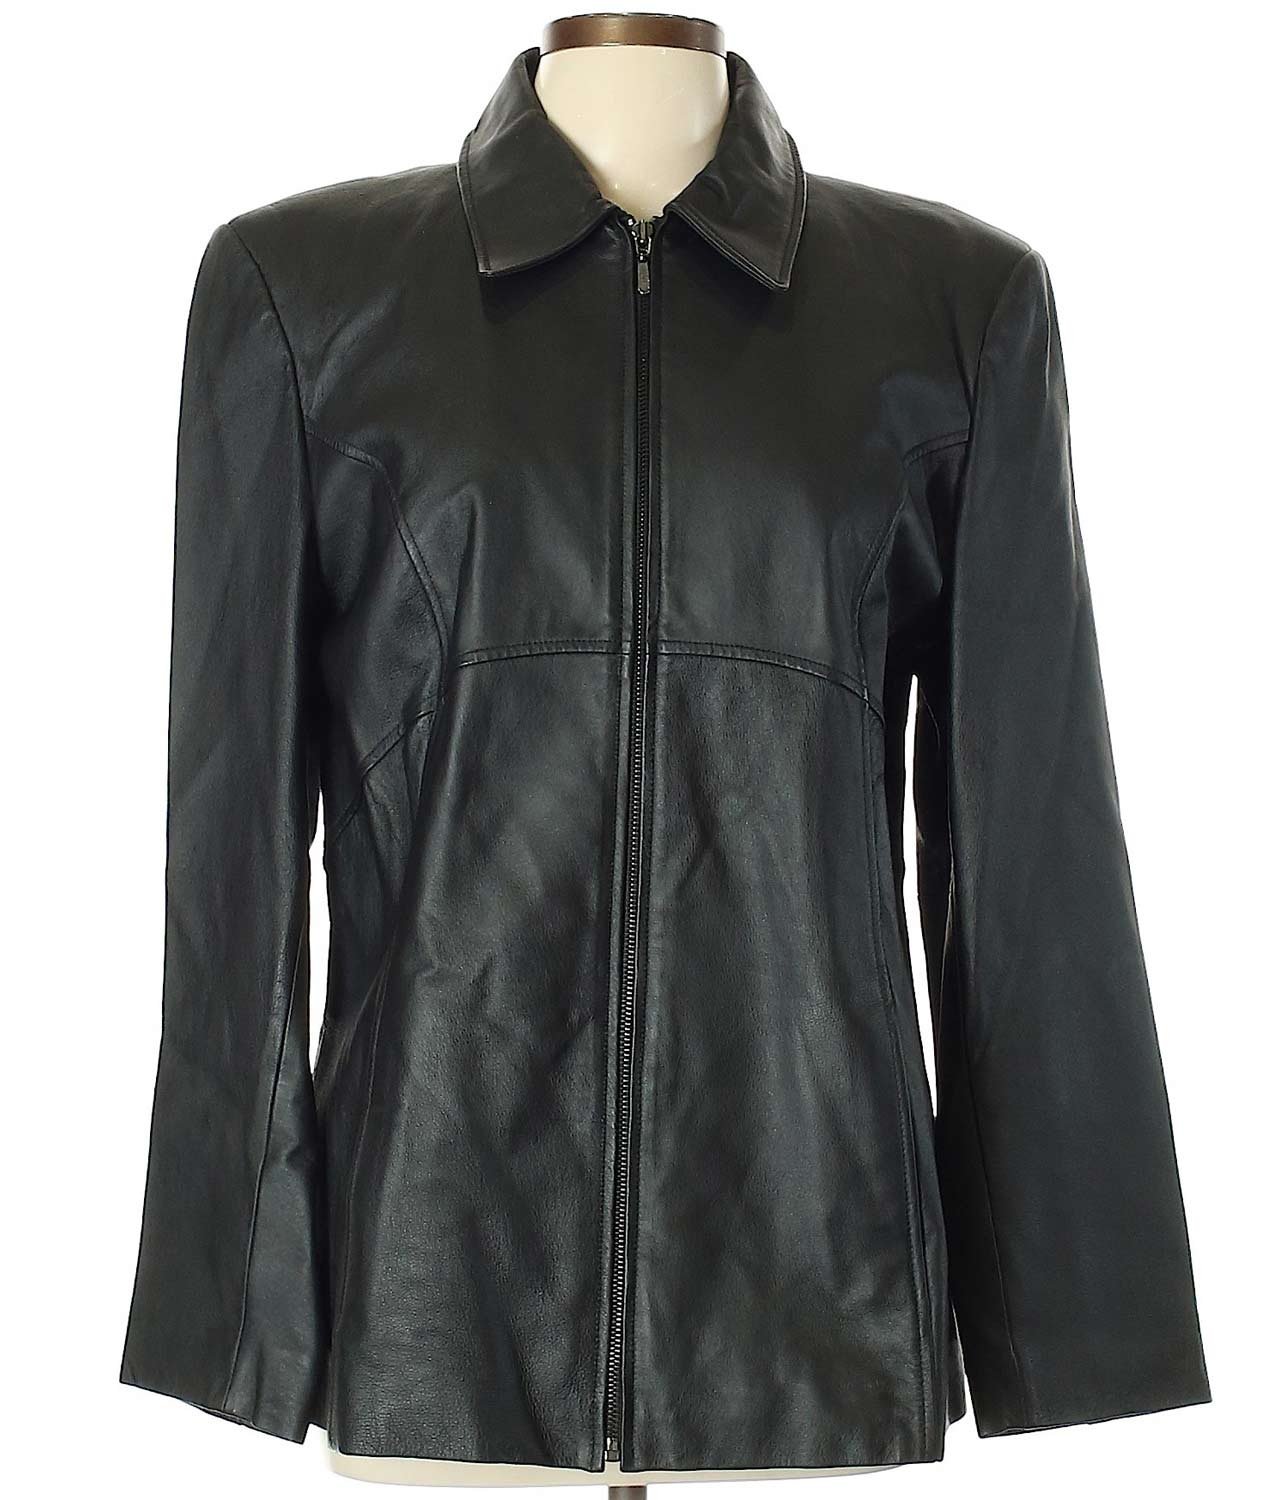 Jacqueline Ferrar Black Leather Jacket